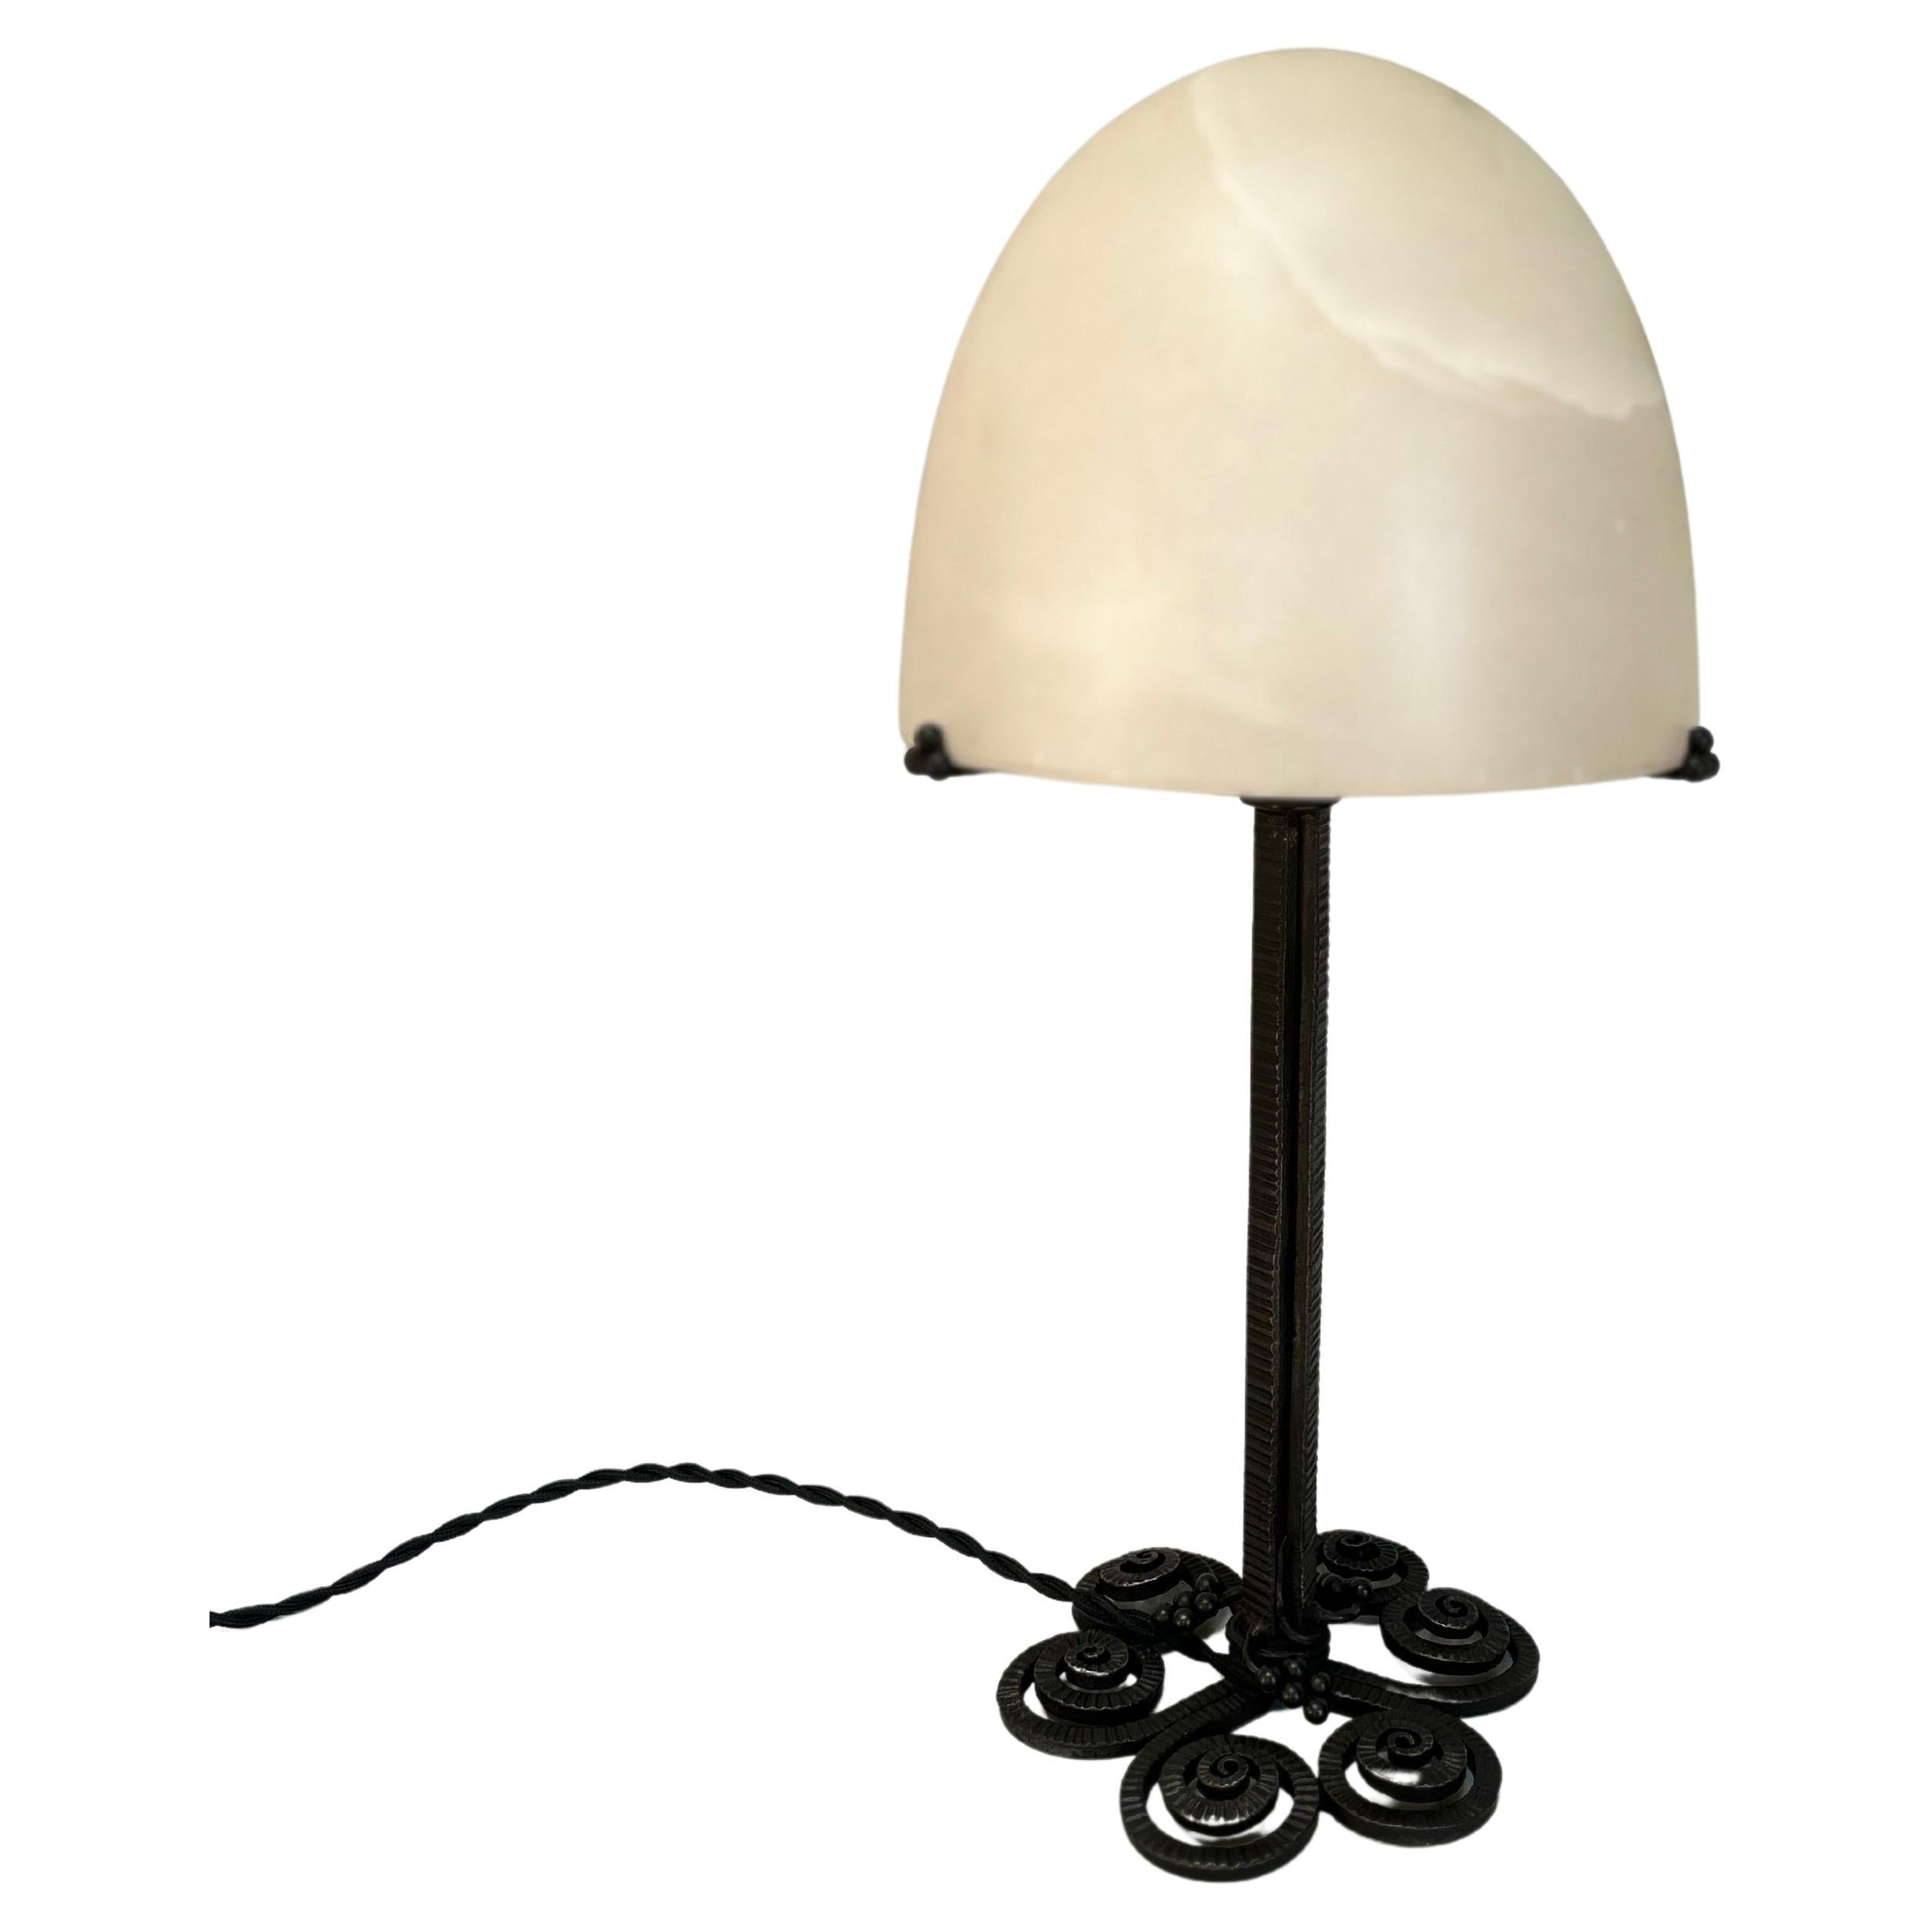 Edgar Brandt Art Deco Lamp For Sale